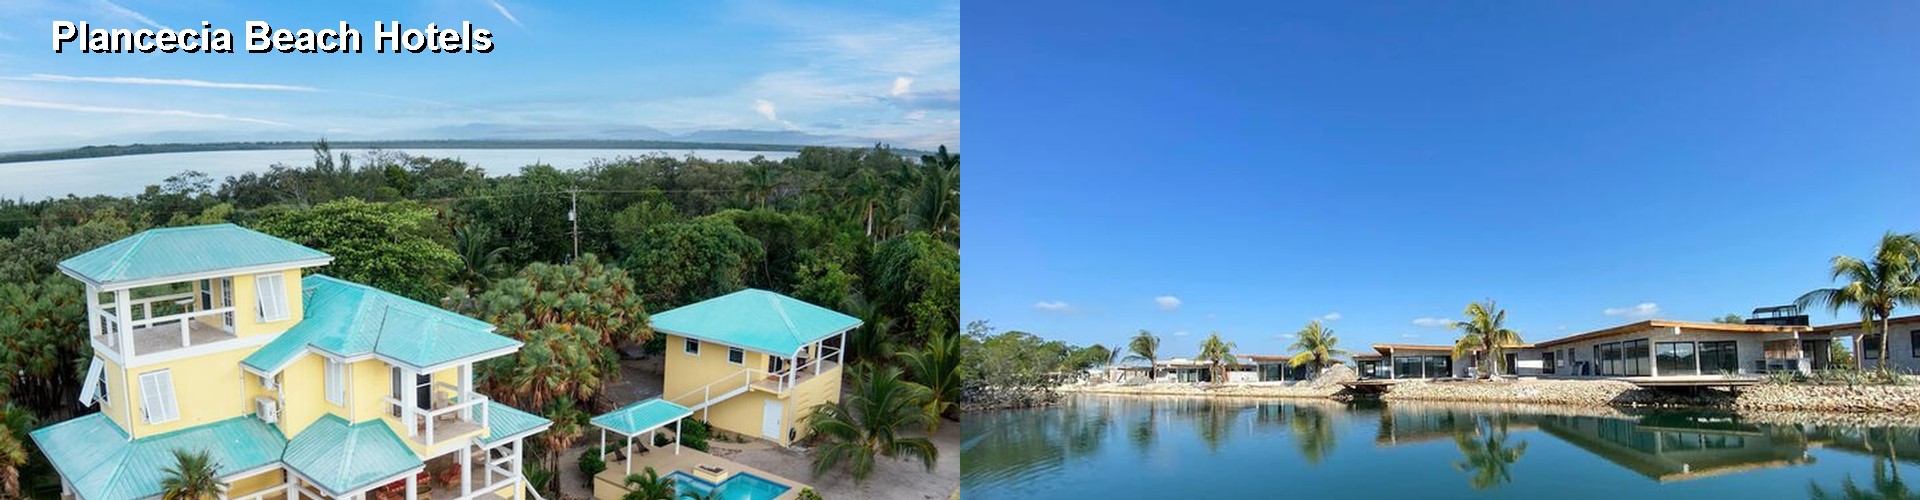 5 Best Hotels near Plancecia Beach